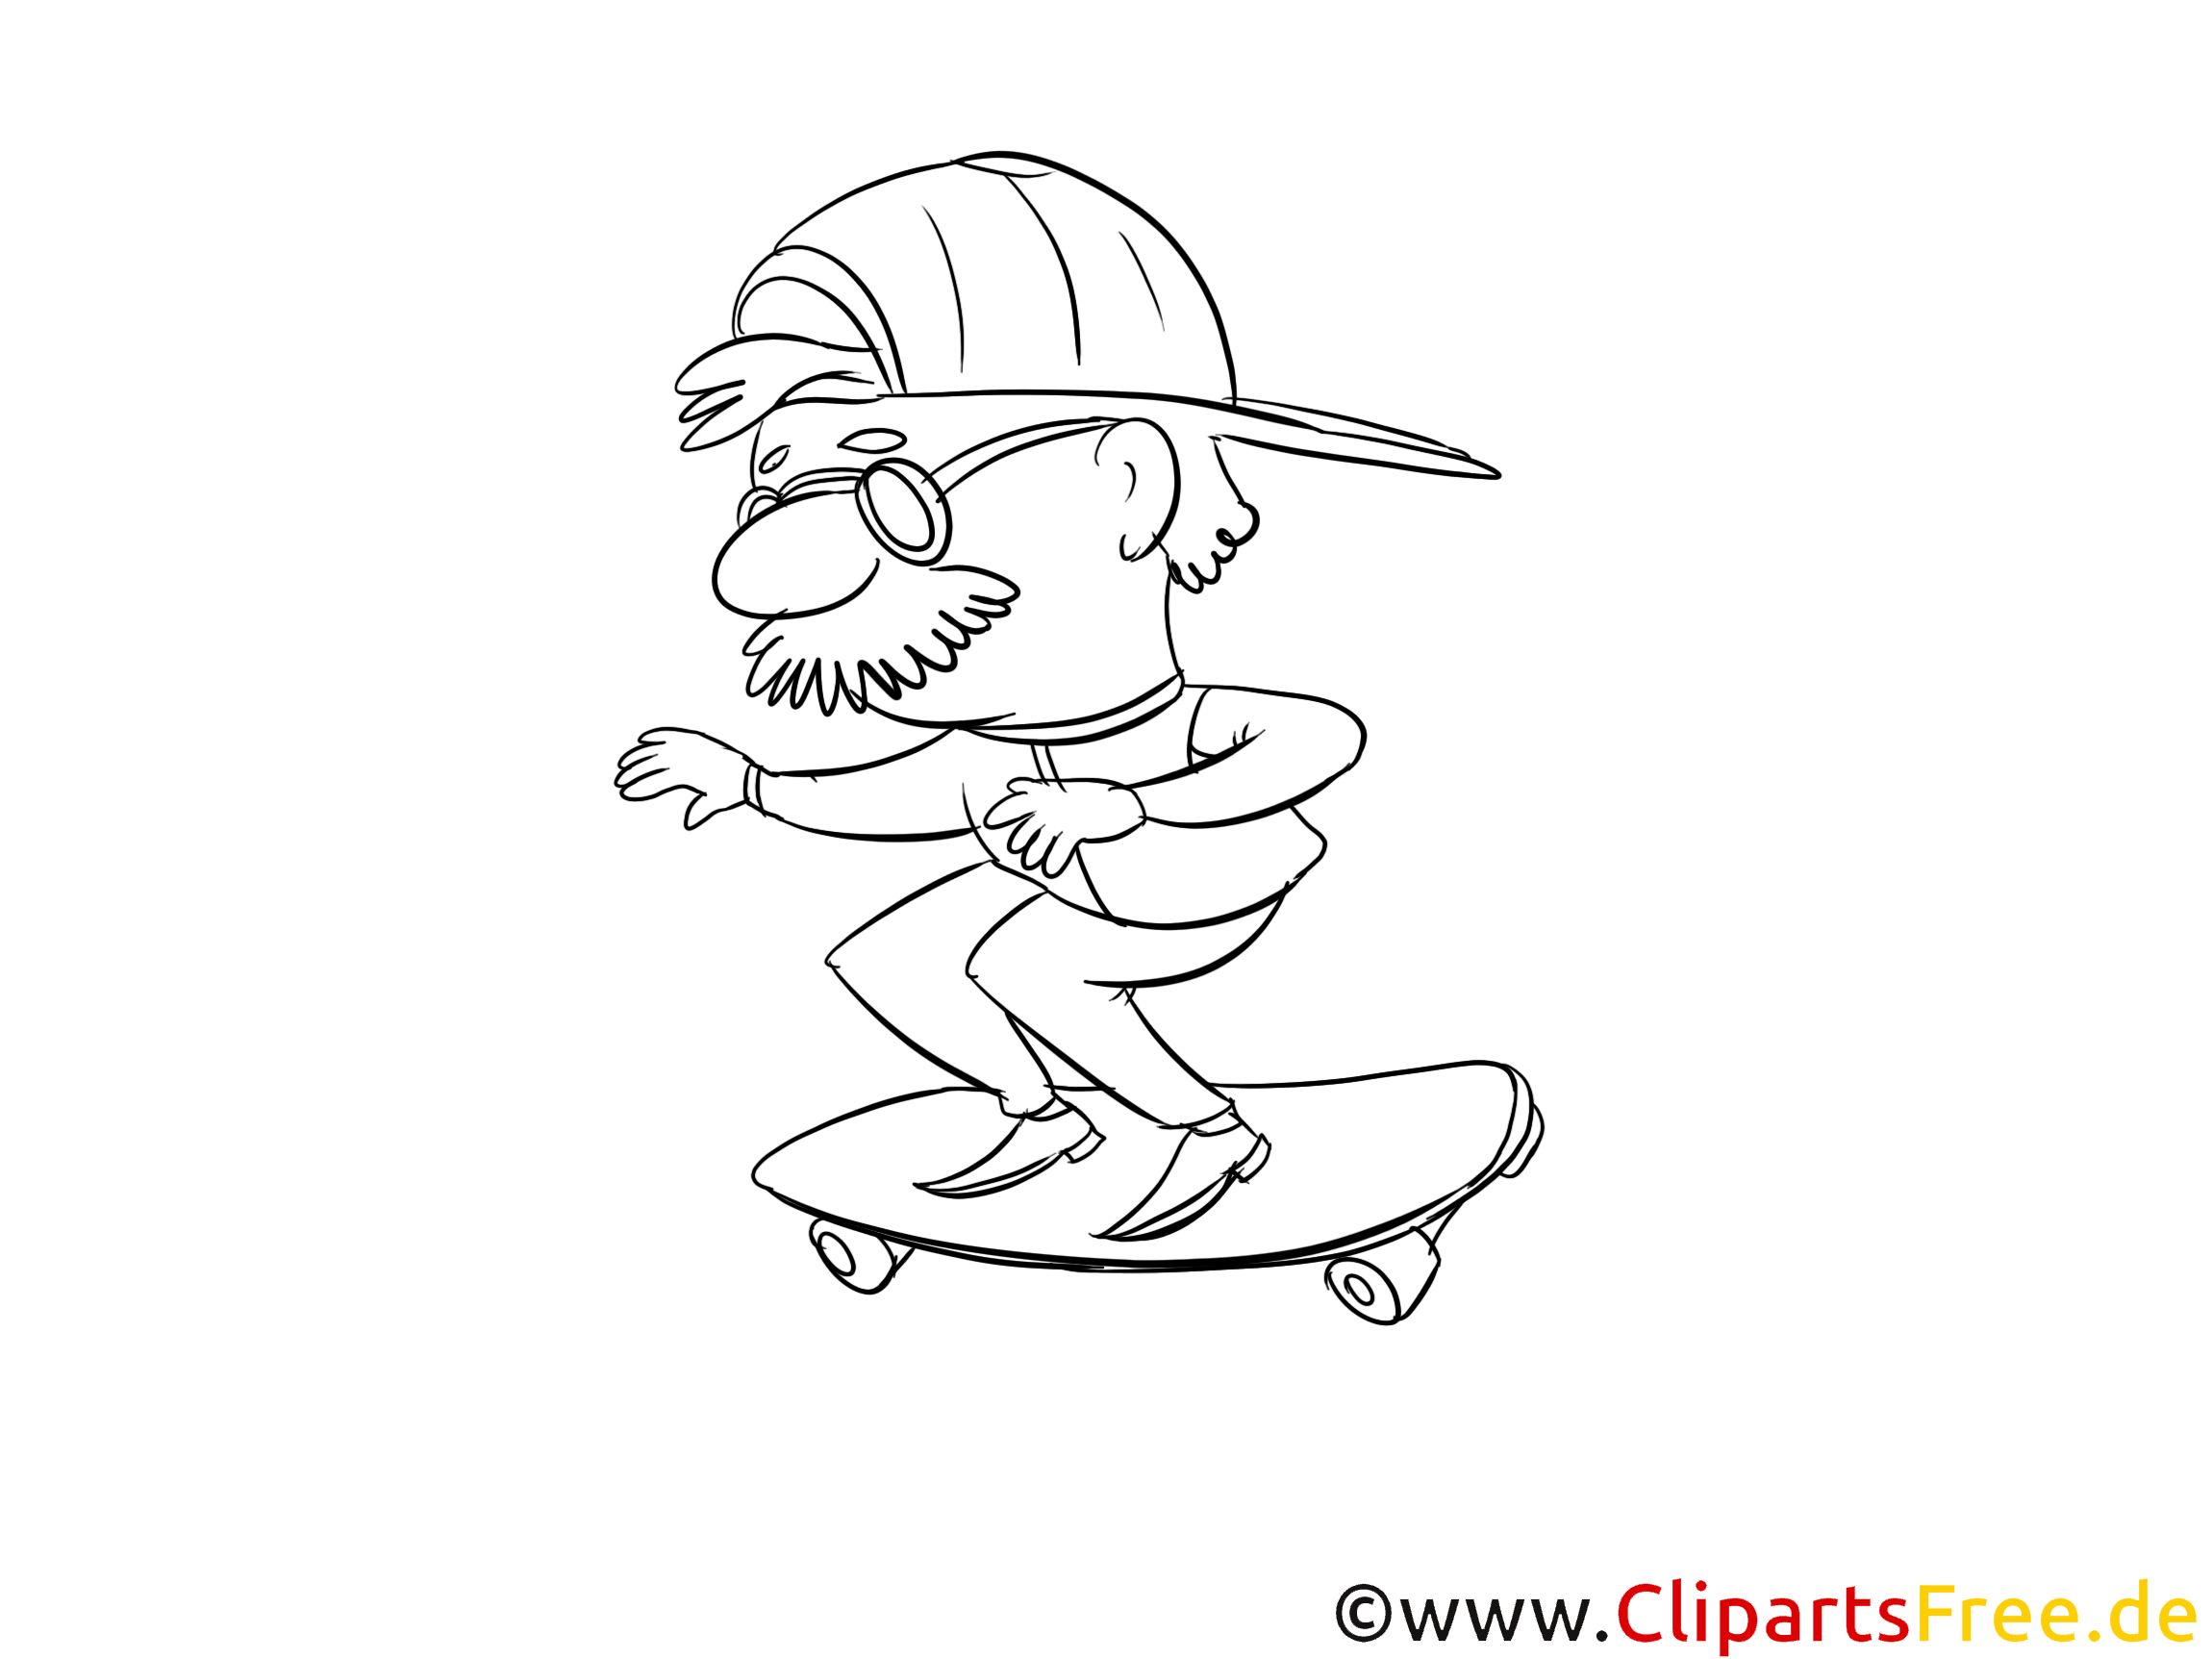 Skateboard images – Sport gratuit à imprimer